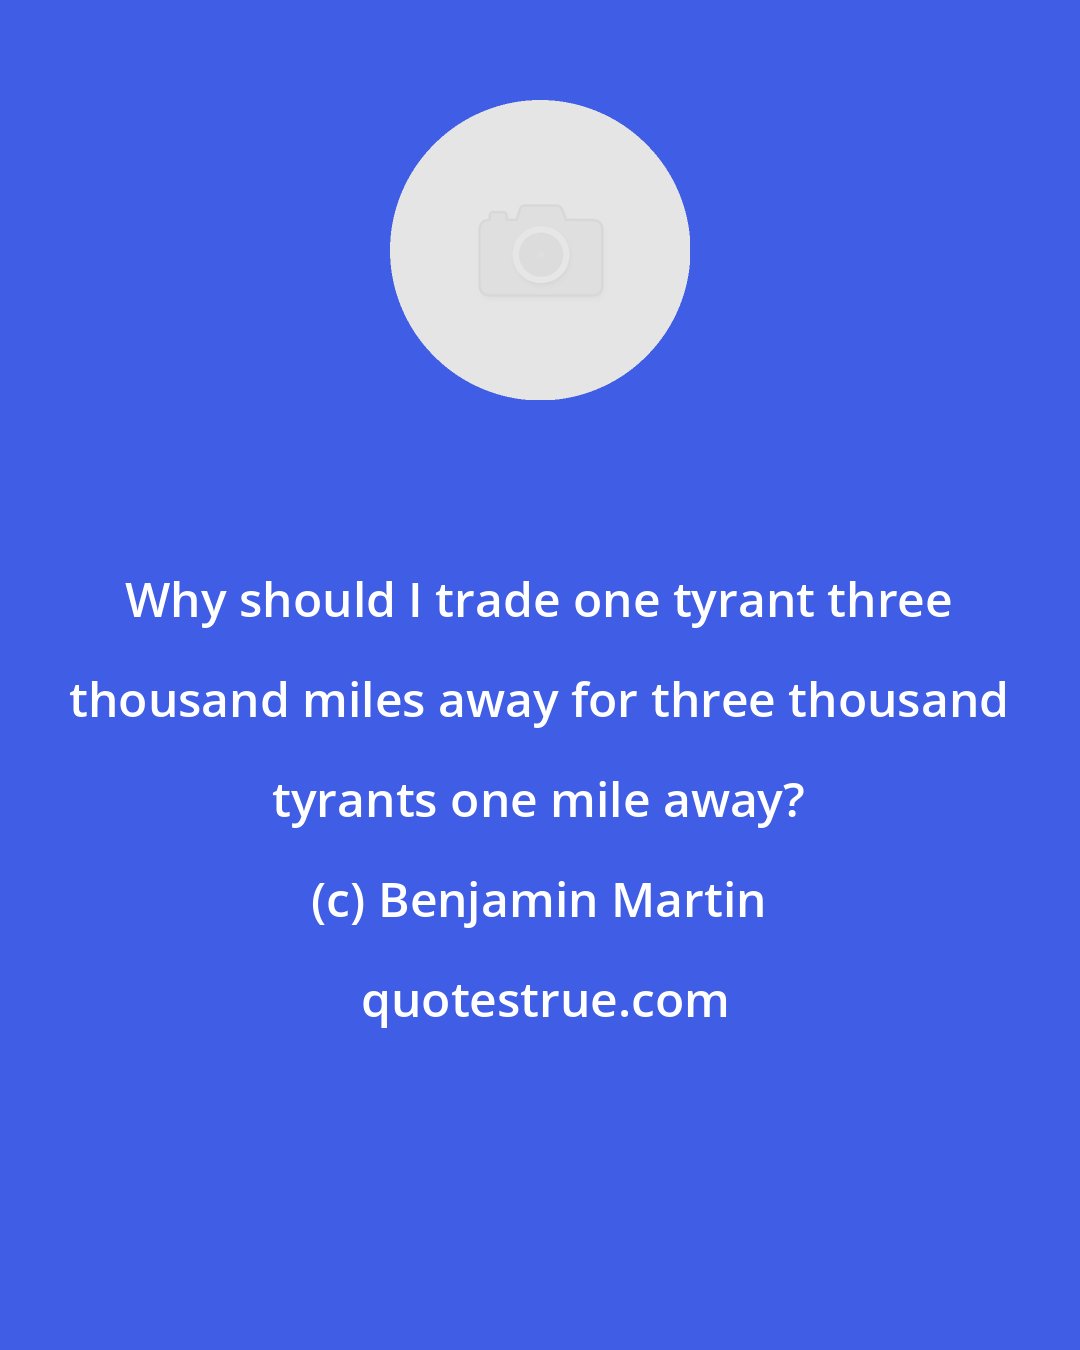 Benjamin Martin: Why should I trade one tyrant three thousand miles away for three thousand tyrants one mile away?